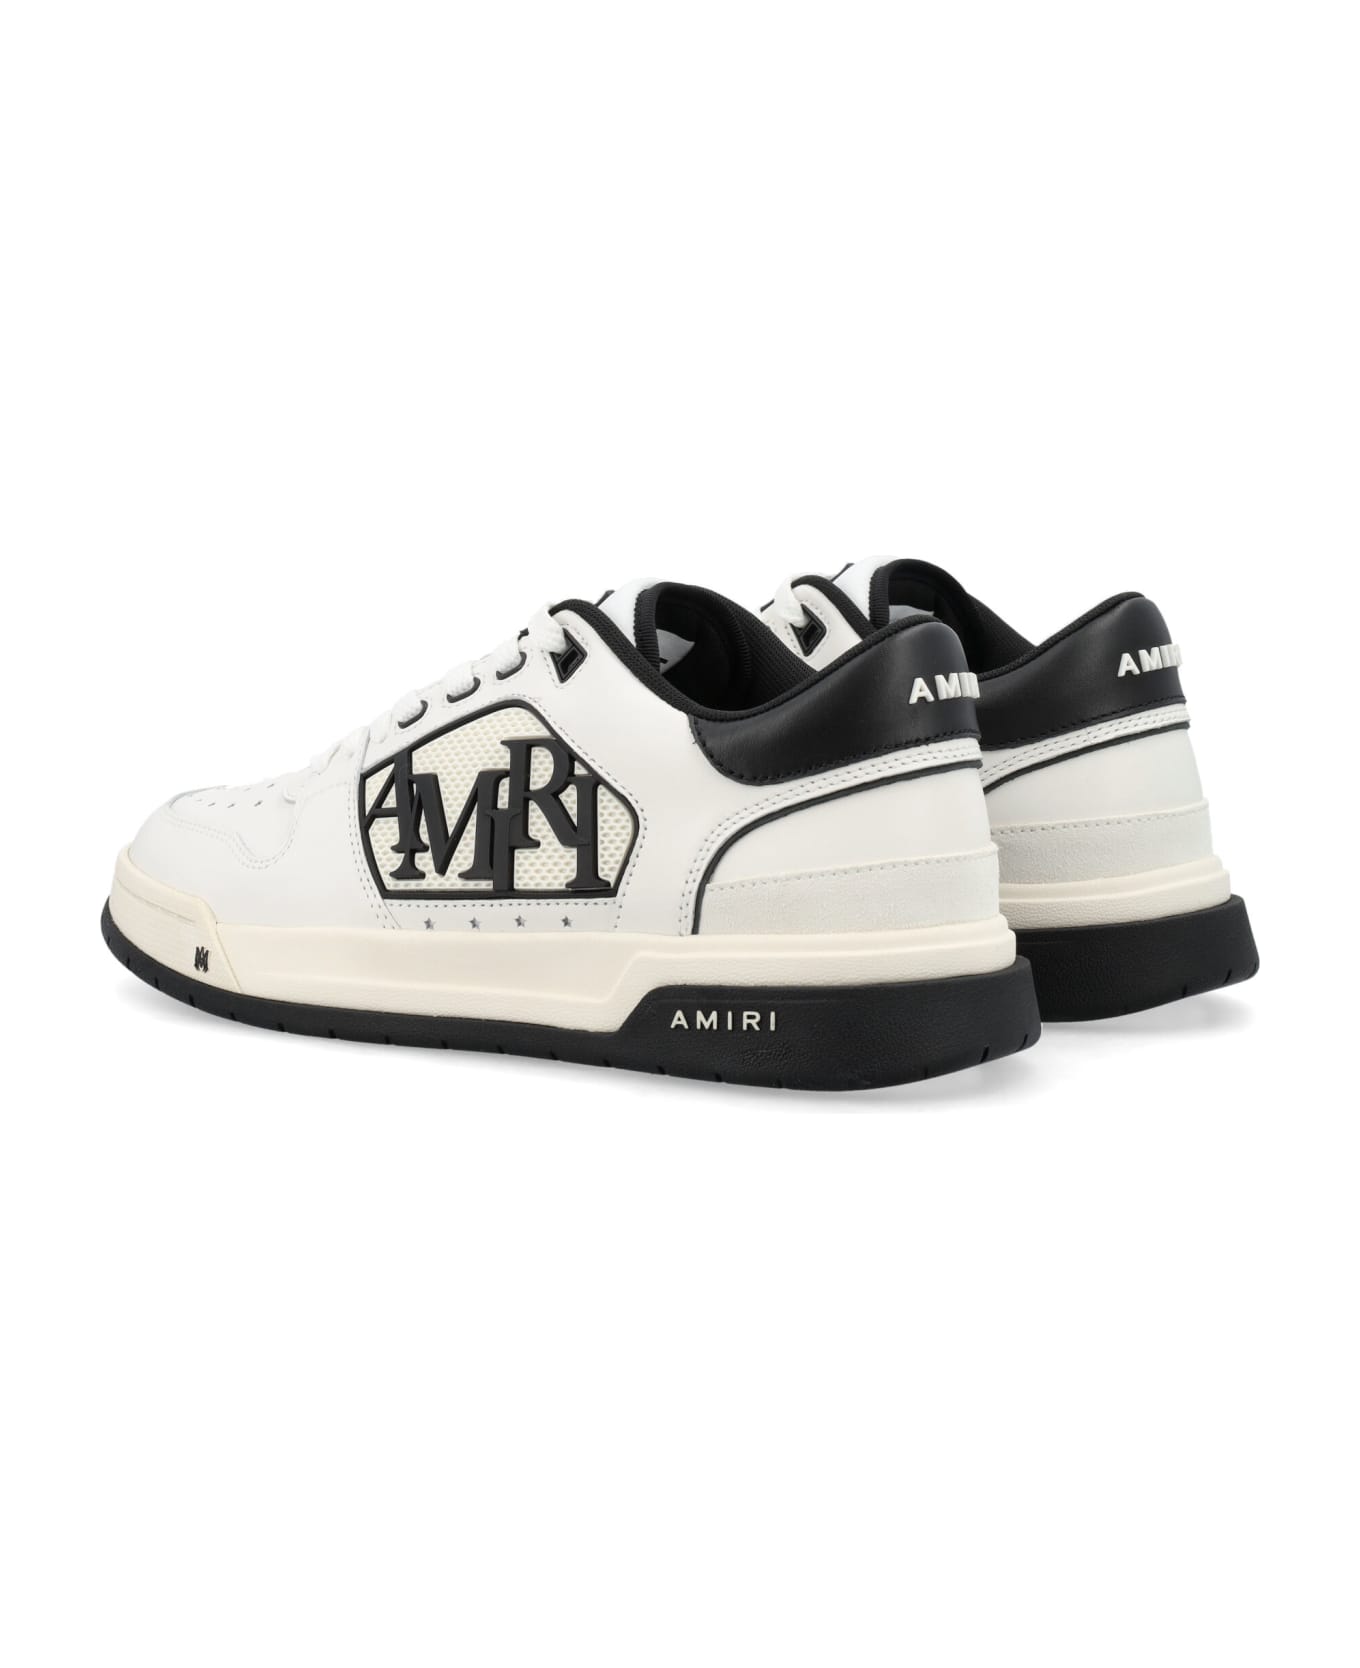 AMIRI Classic Low Sneakers - WHITE BLACK